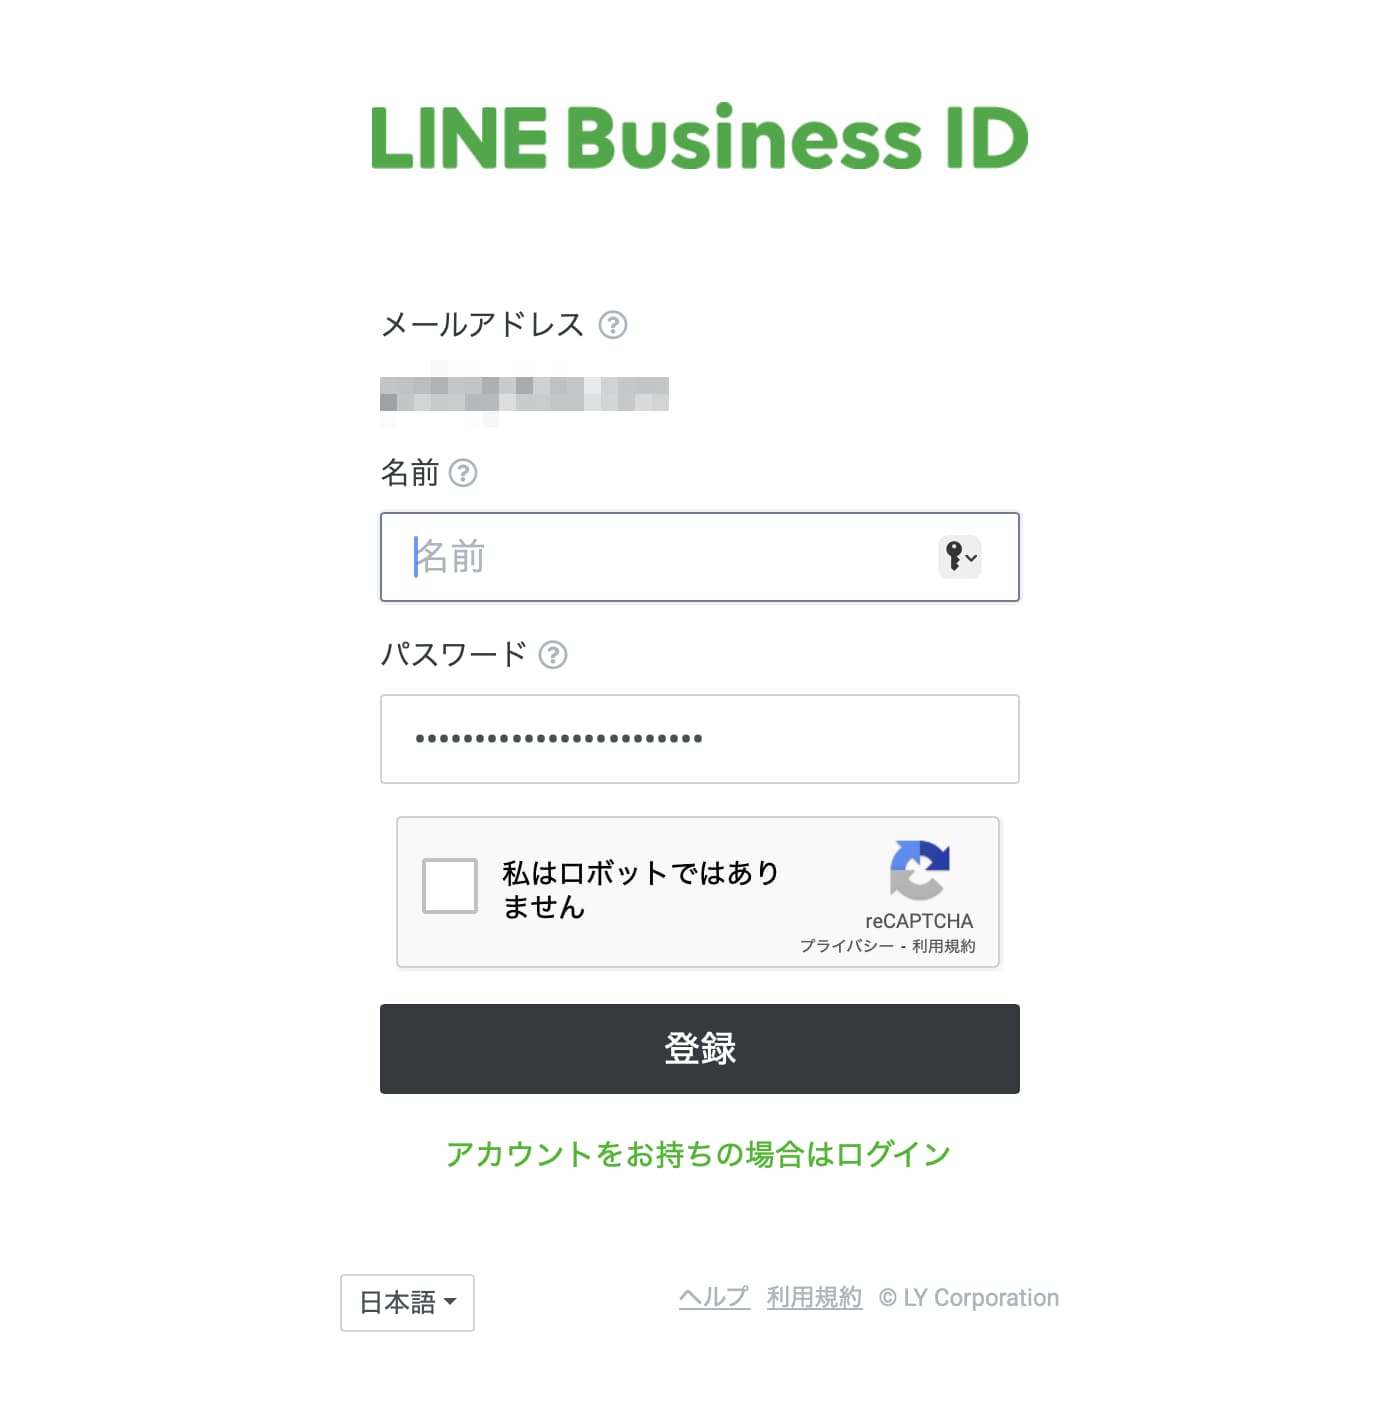 LINE Business ID 登録ページ